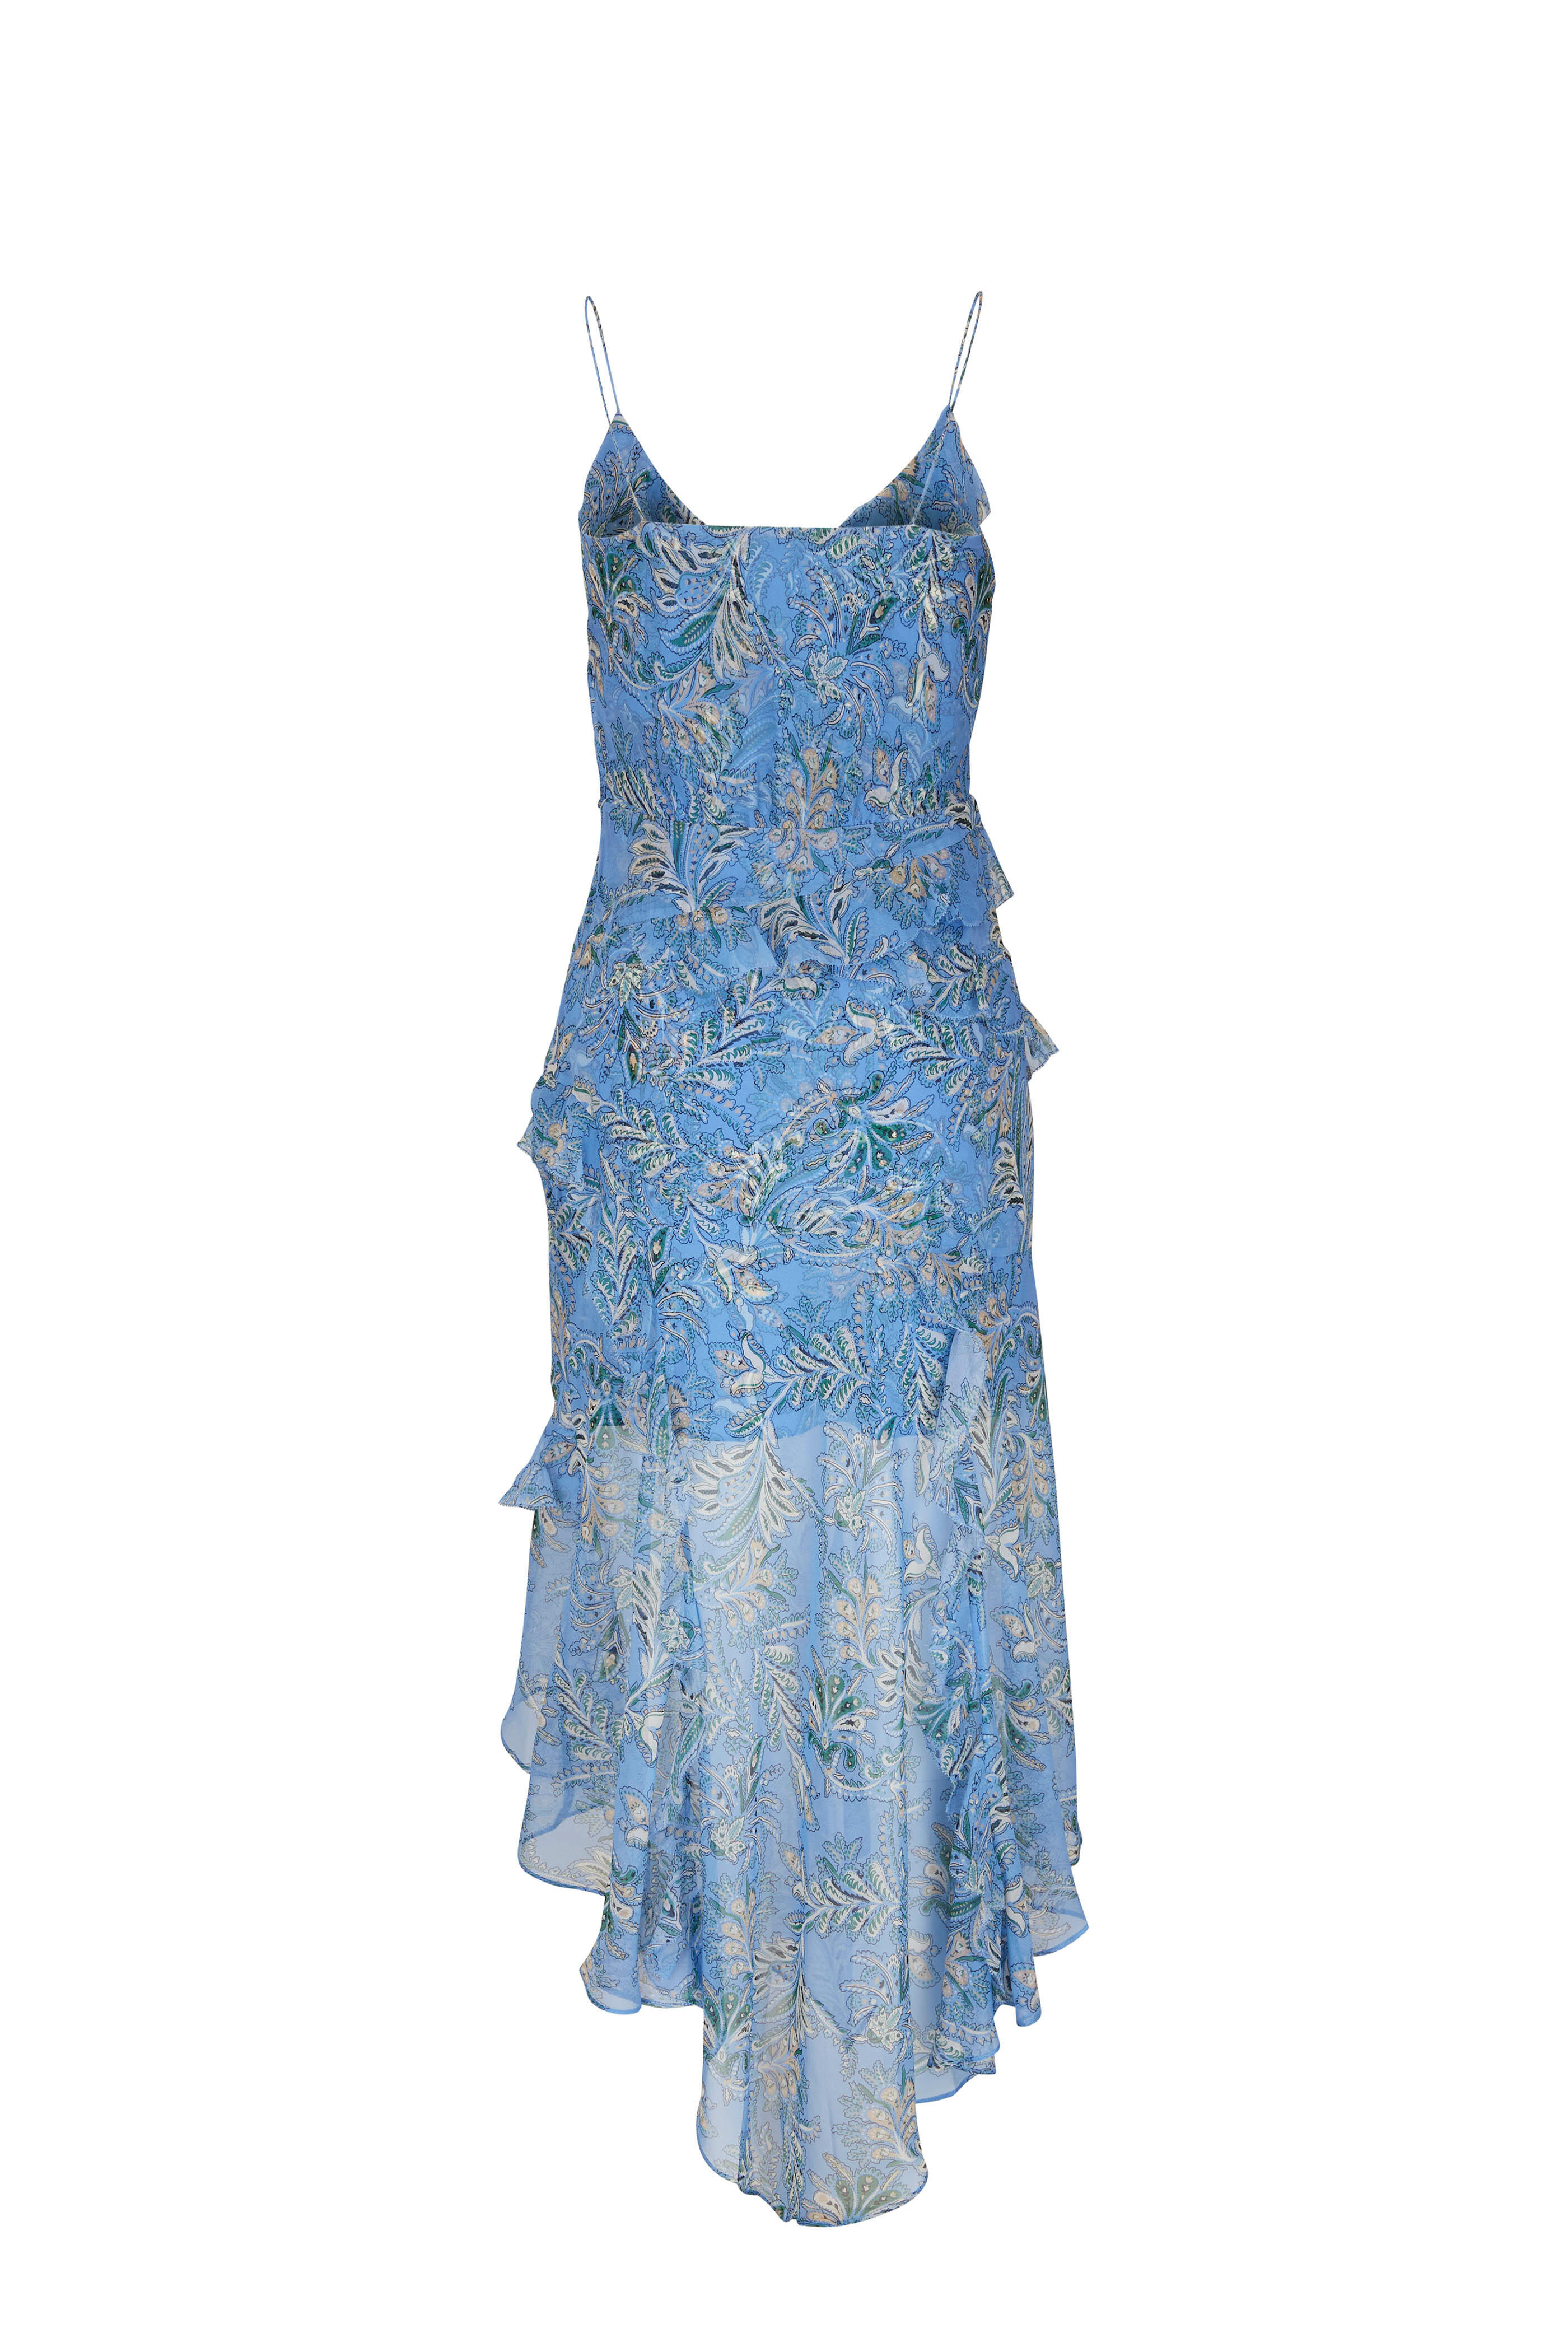 Veronica Beard - Avenel Blue Floral Print Dress